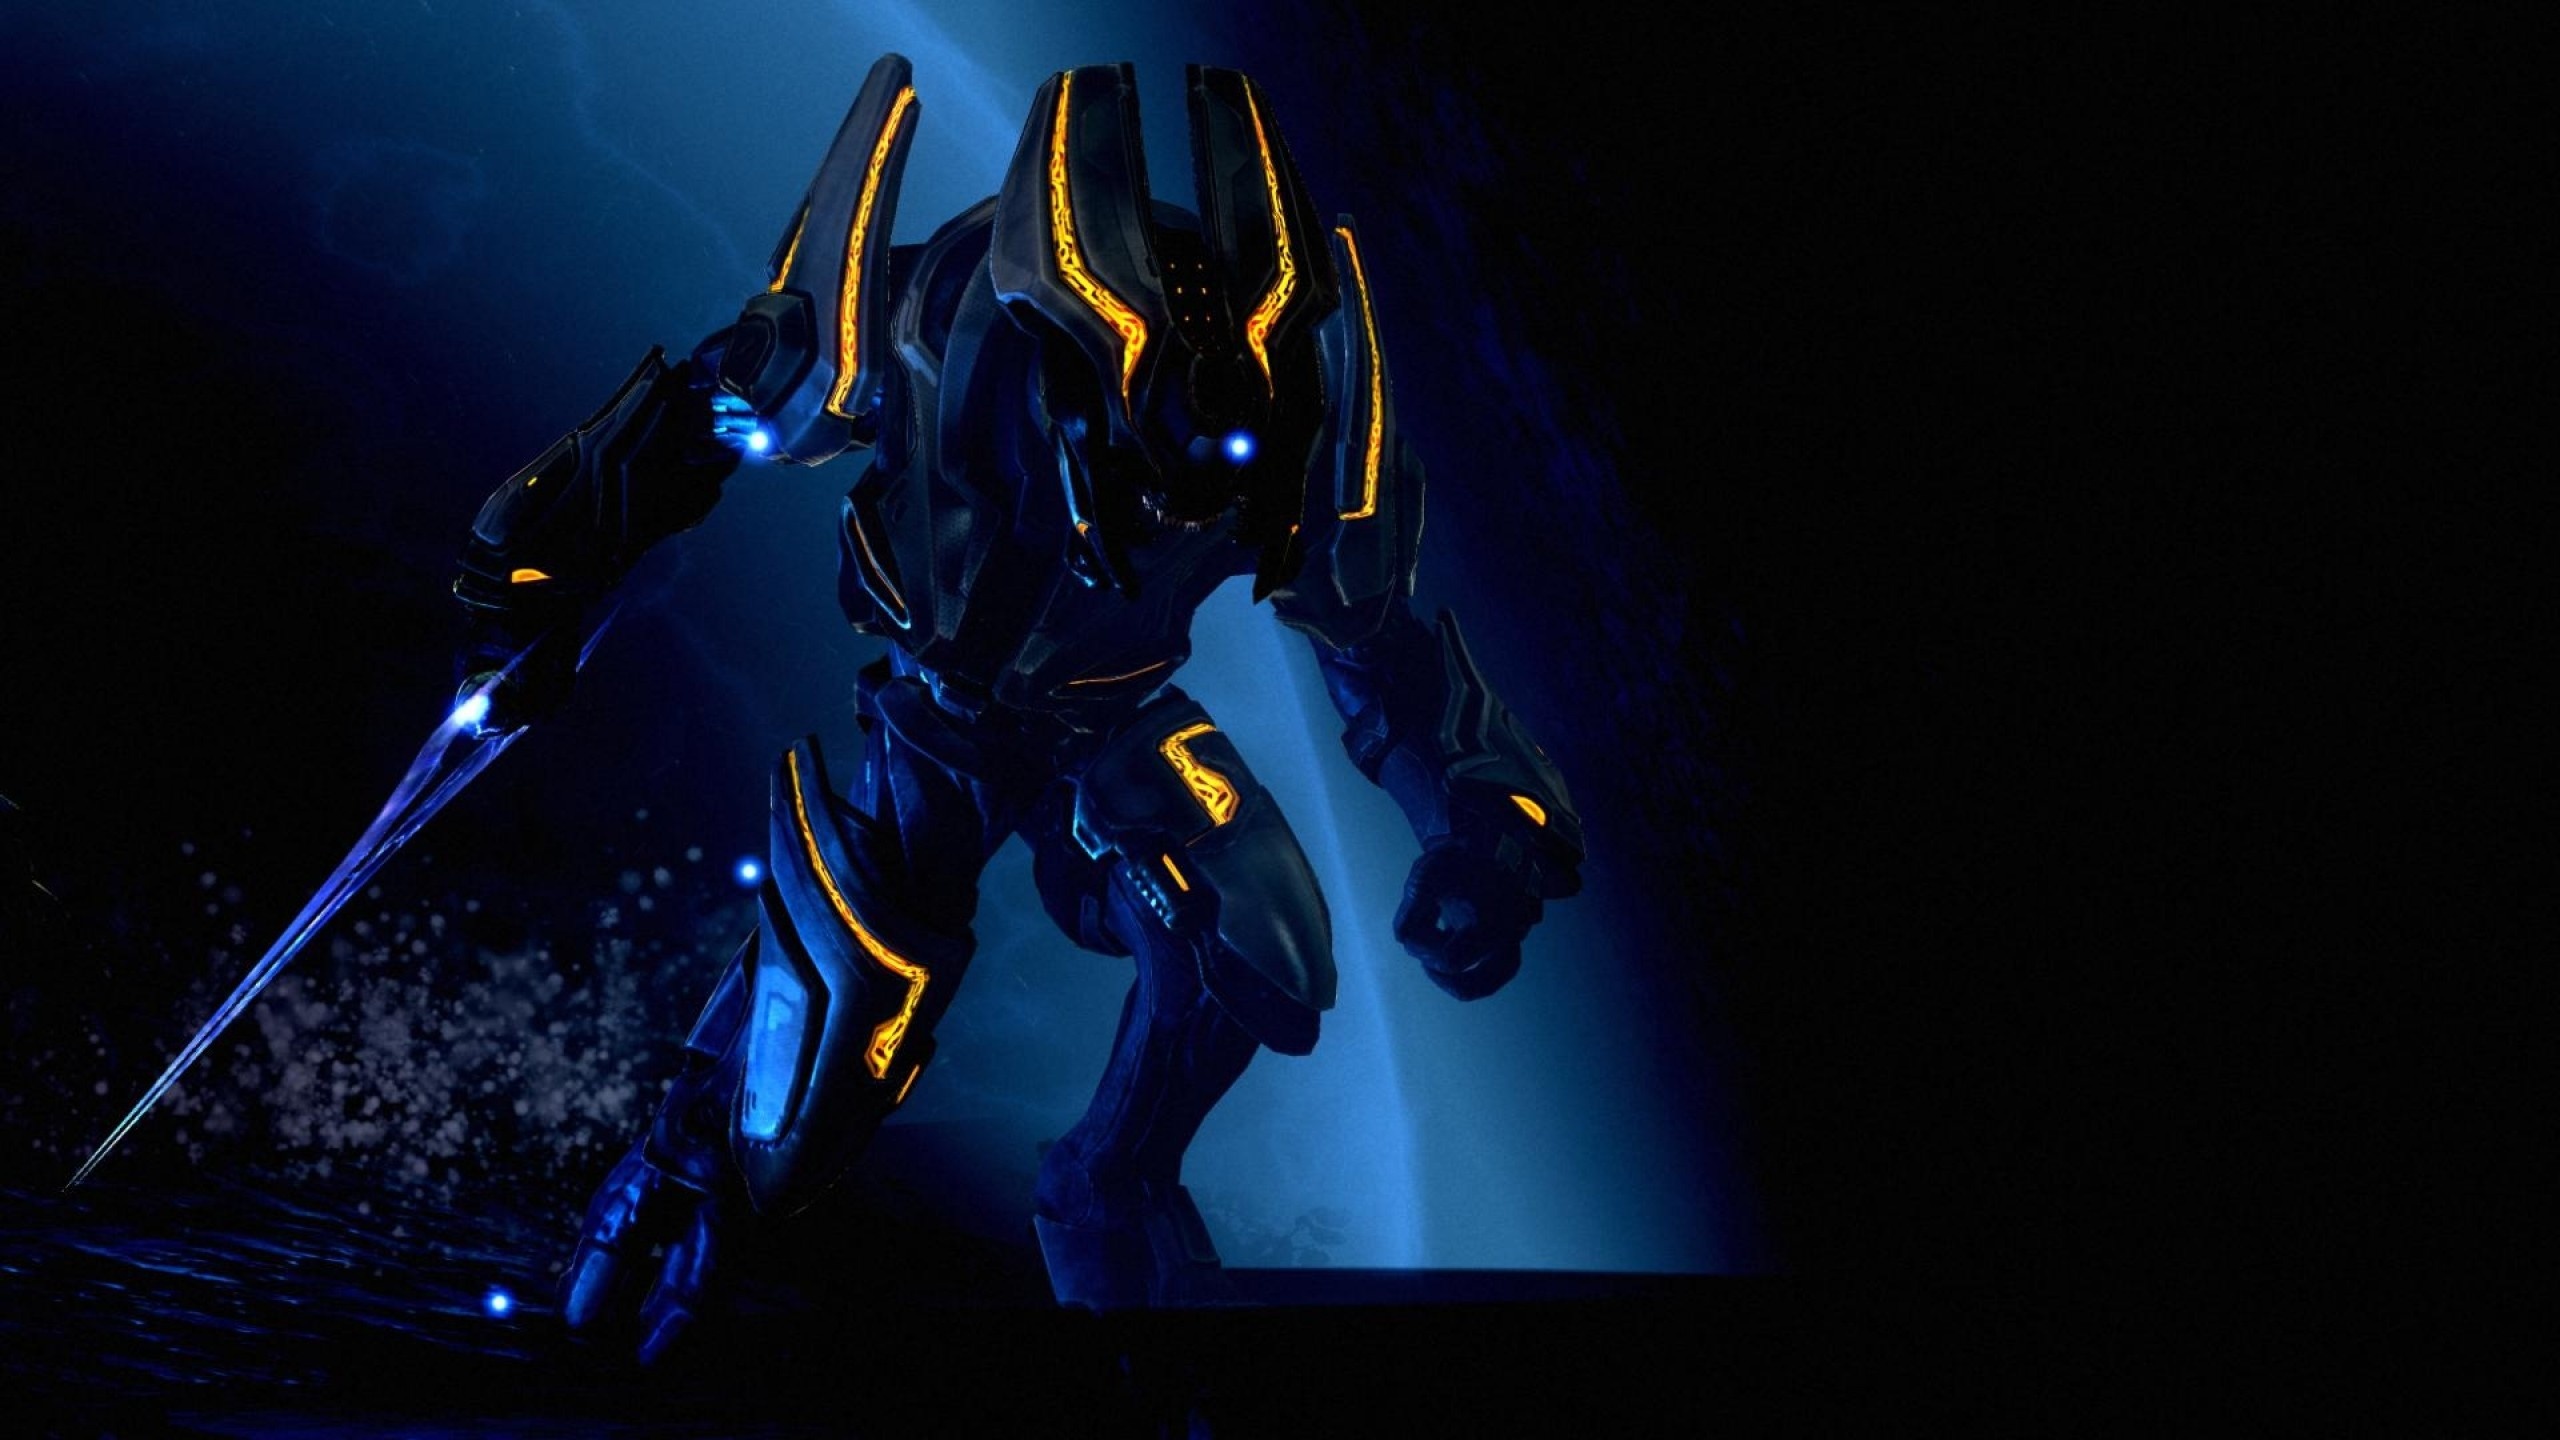 Halo covenant wallpaper, Stunning artwork, Alien enemies, Intense combat, 2560x1440 HD Desktop